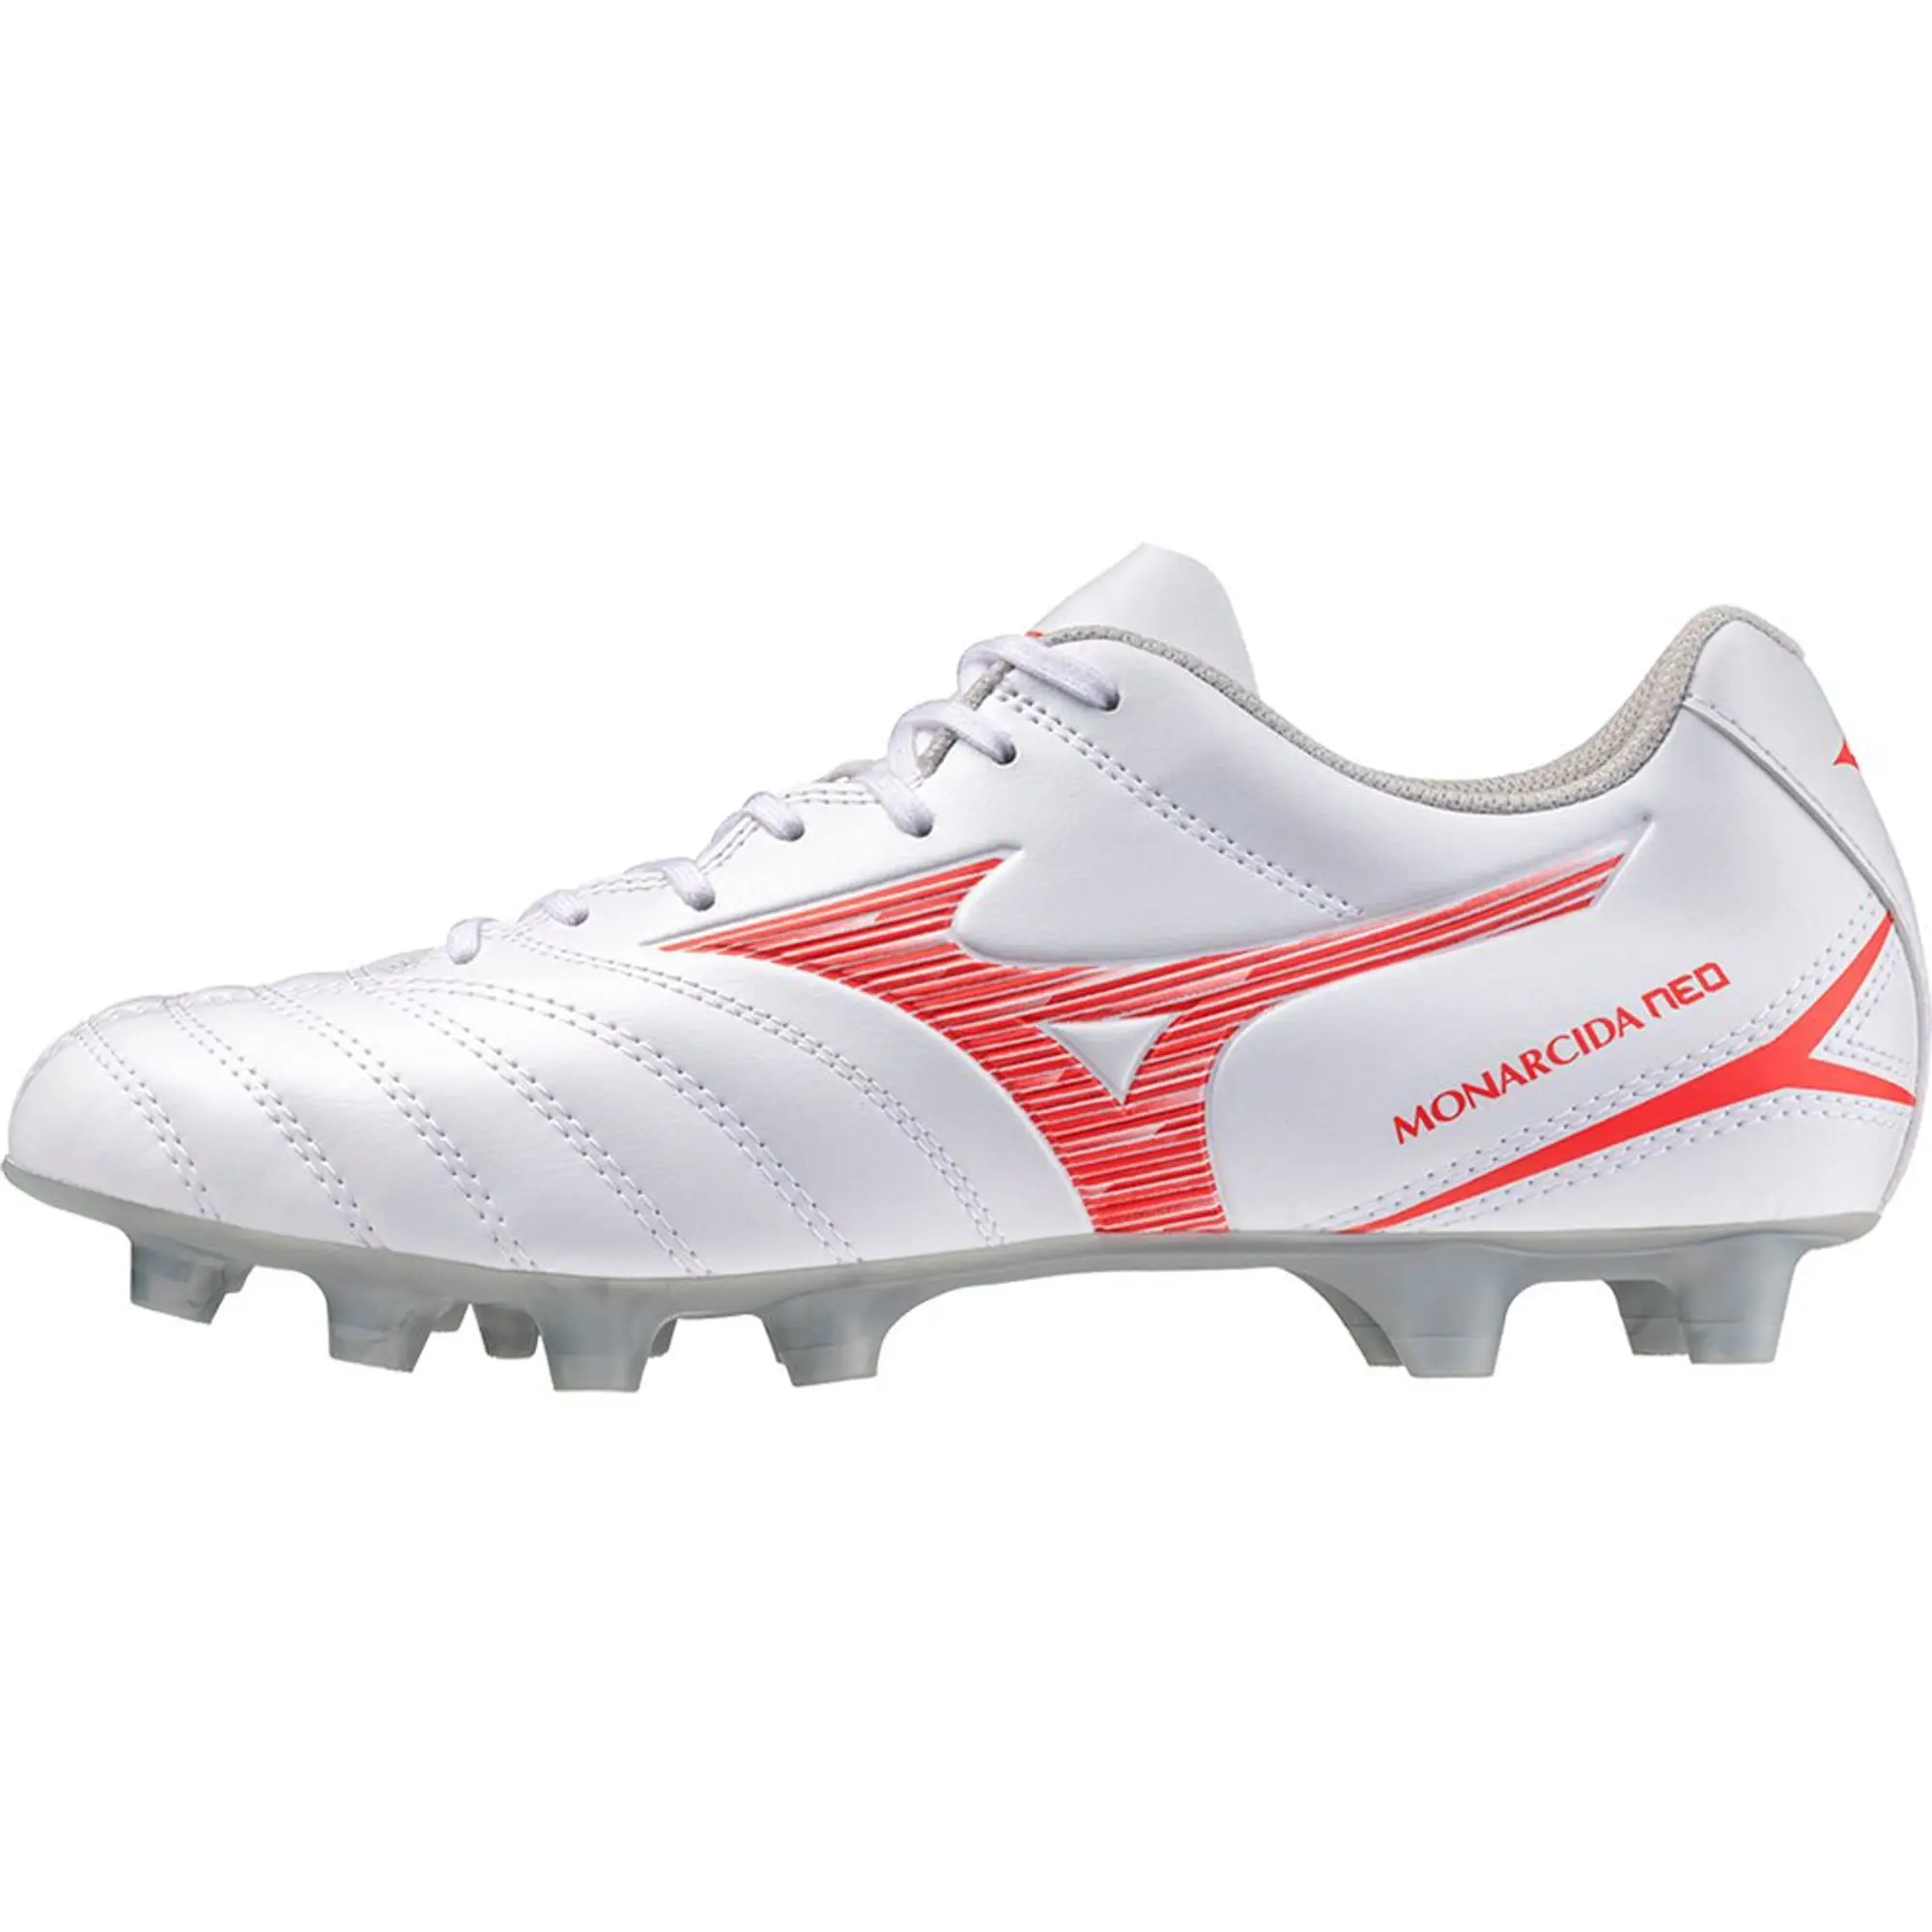 Mizuno Monarcida Neo Iii Select Md Football Boots  - White